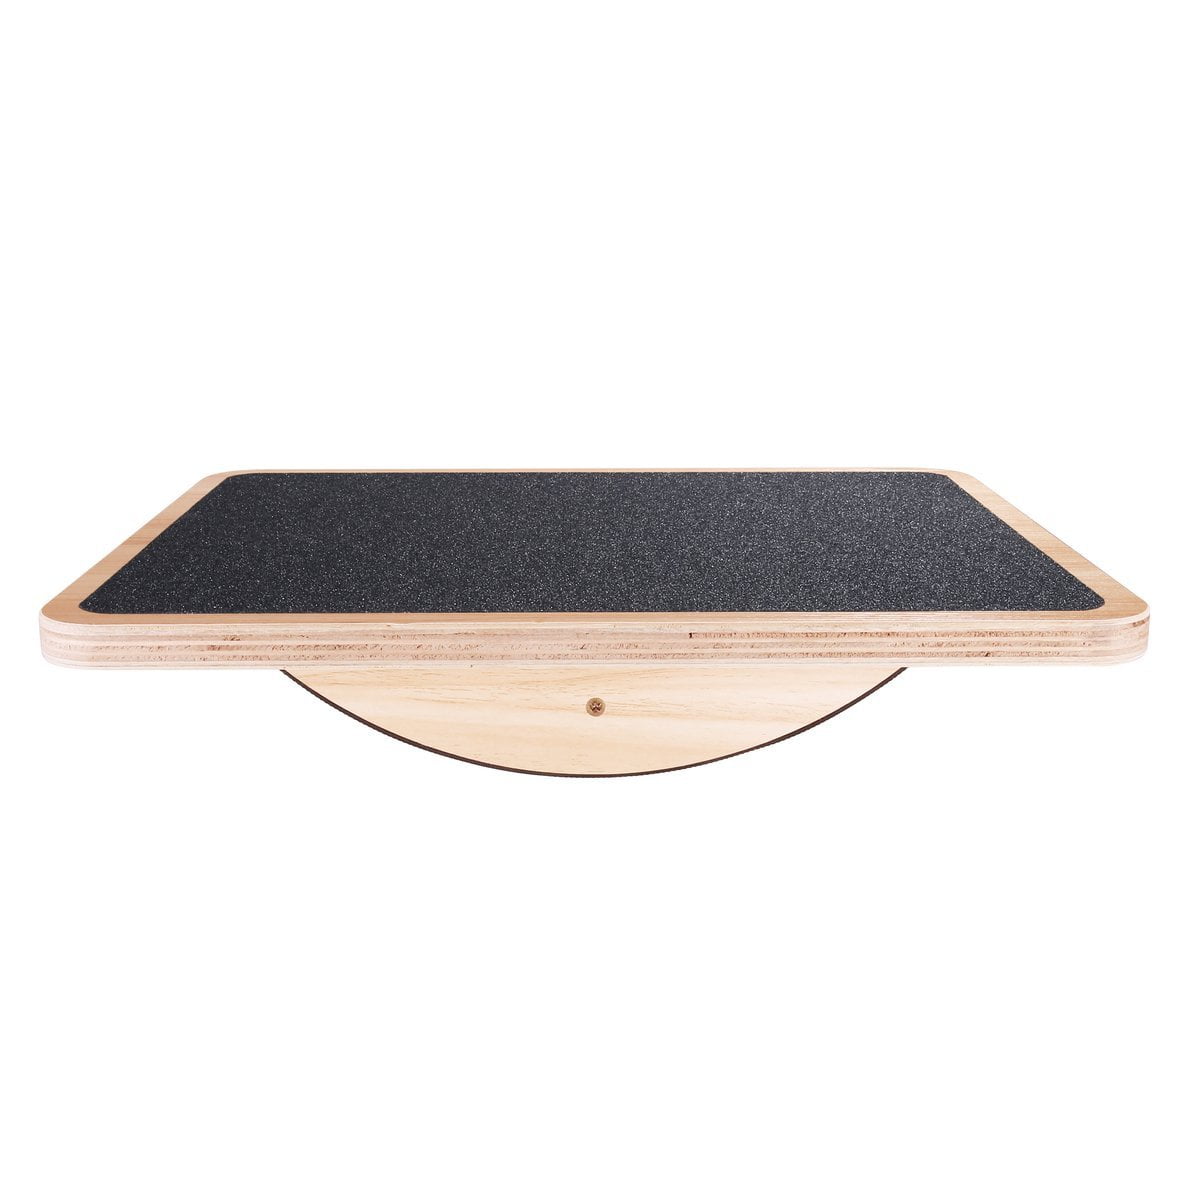 Strongtek professional wooden balance board, rocker board, 17.5 inch,  anti-slip top, core and stability training 